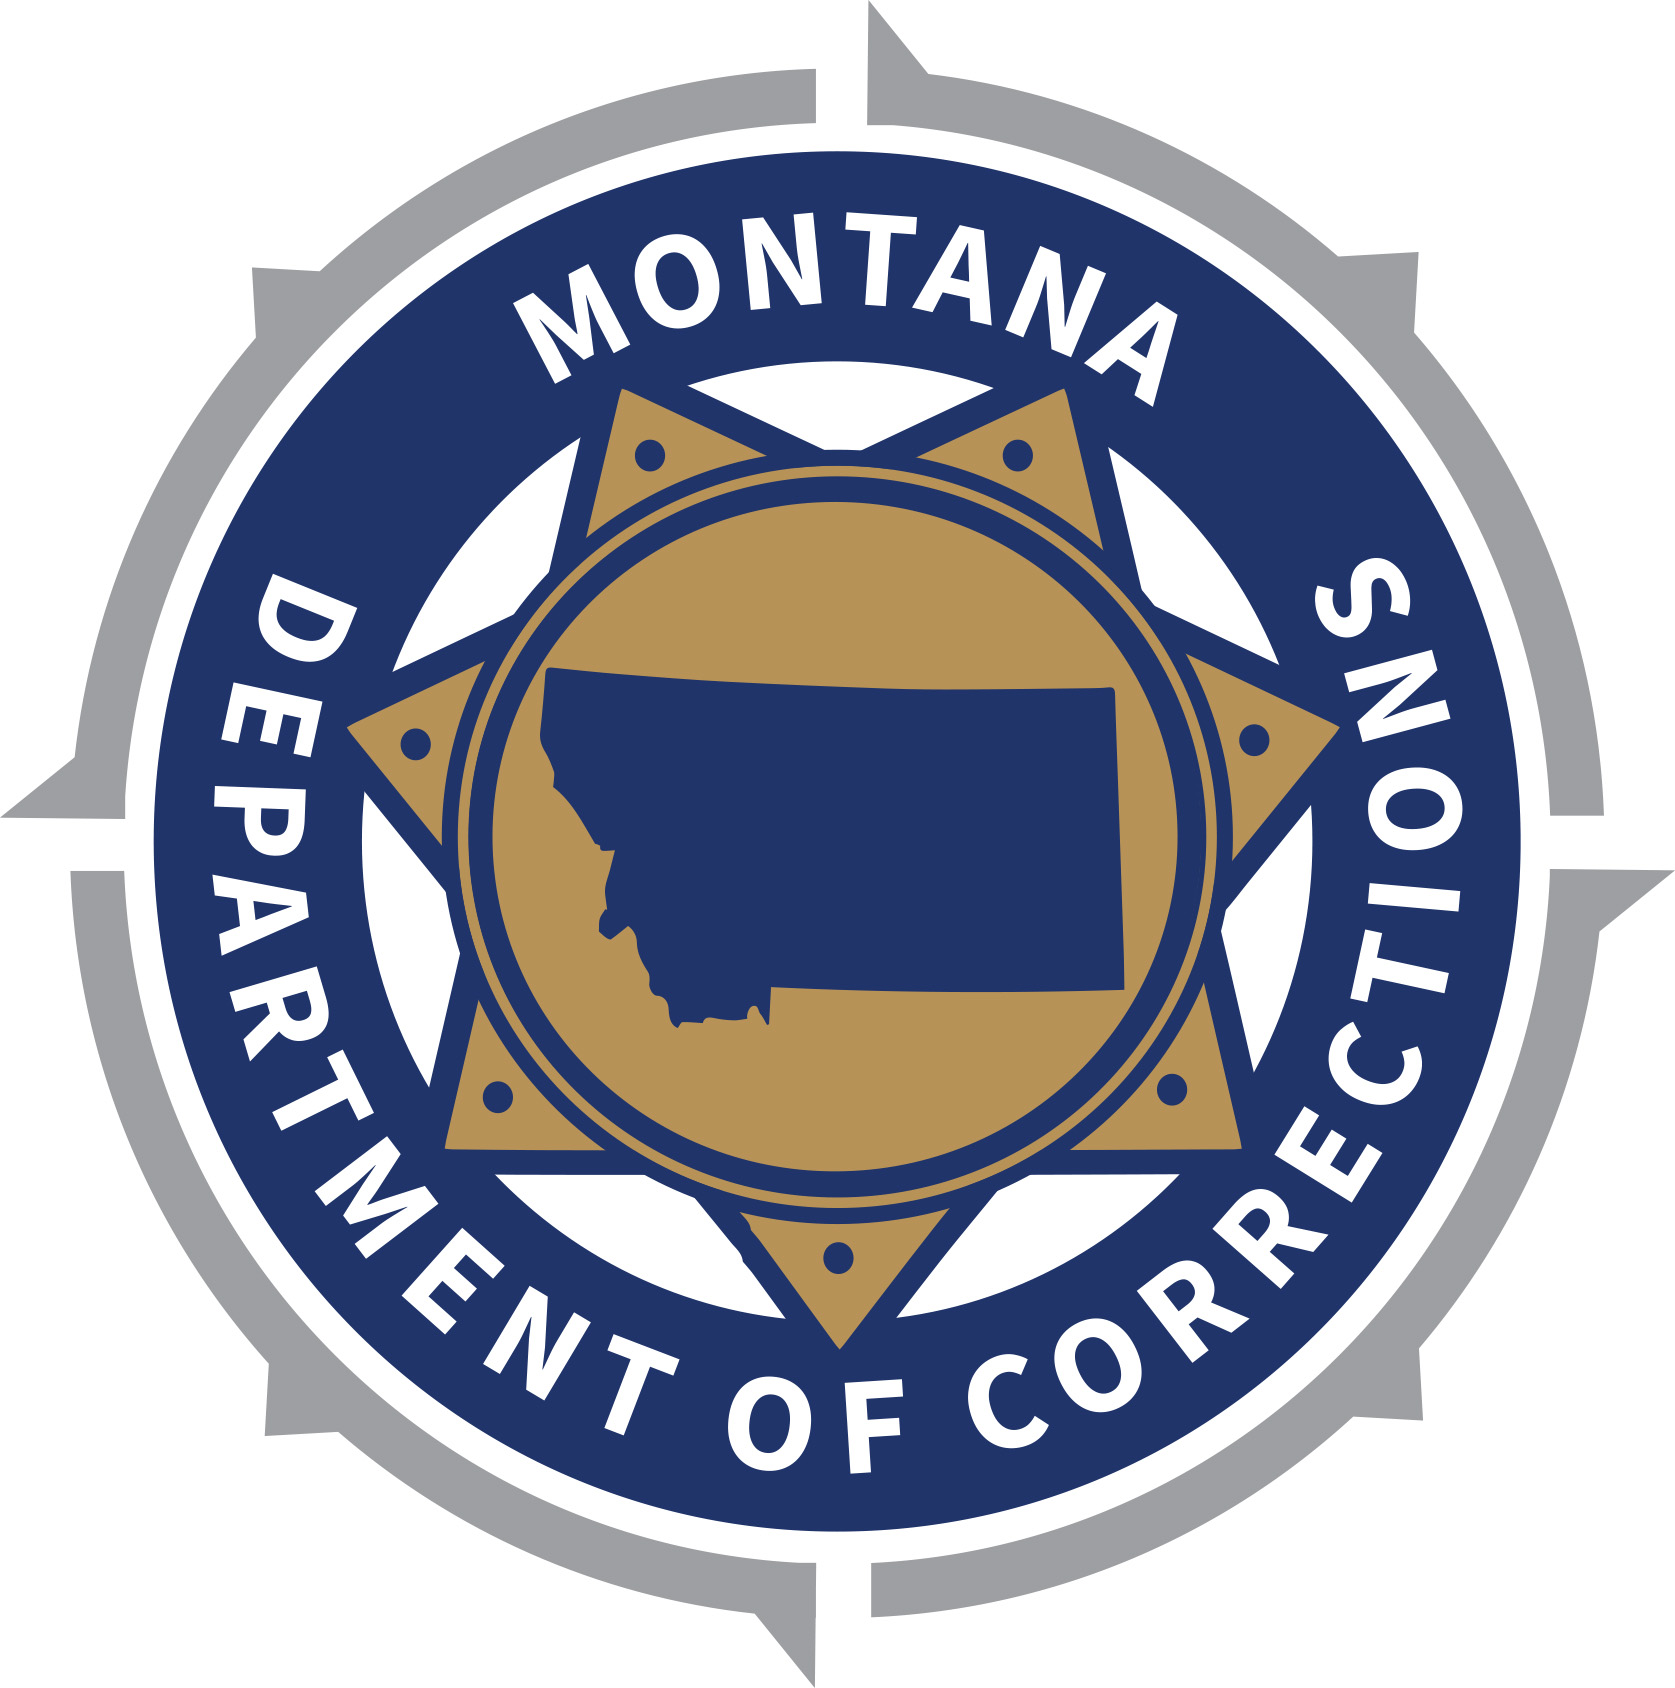 Montana State Adult Probation & Parole